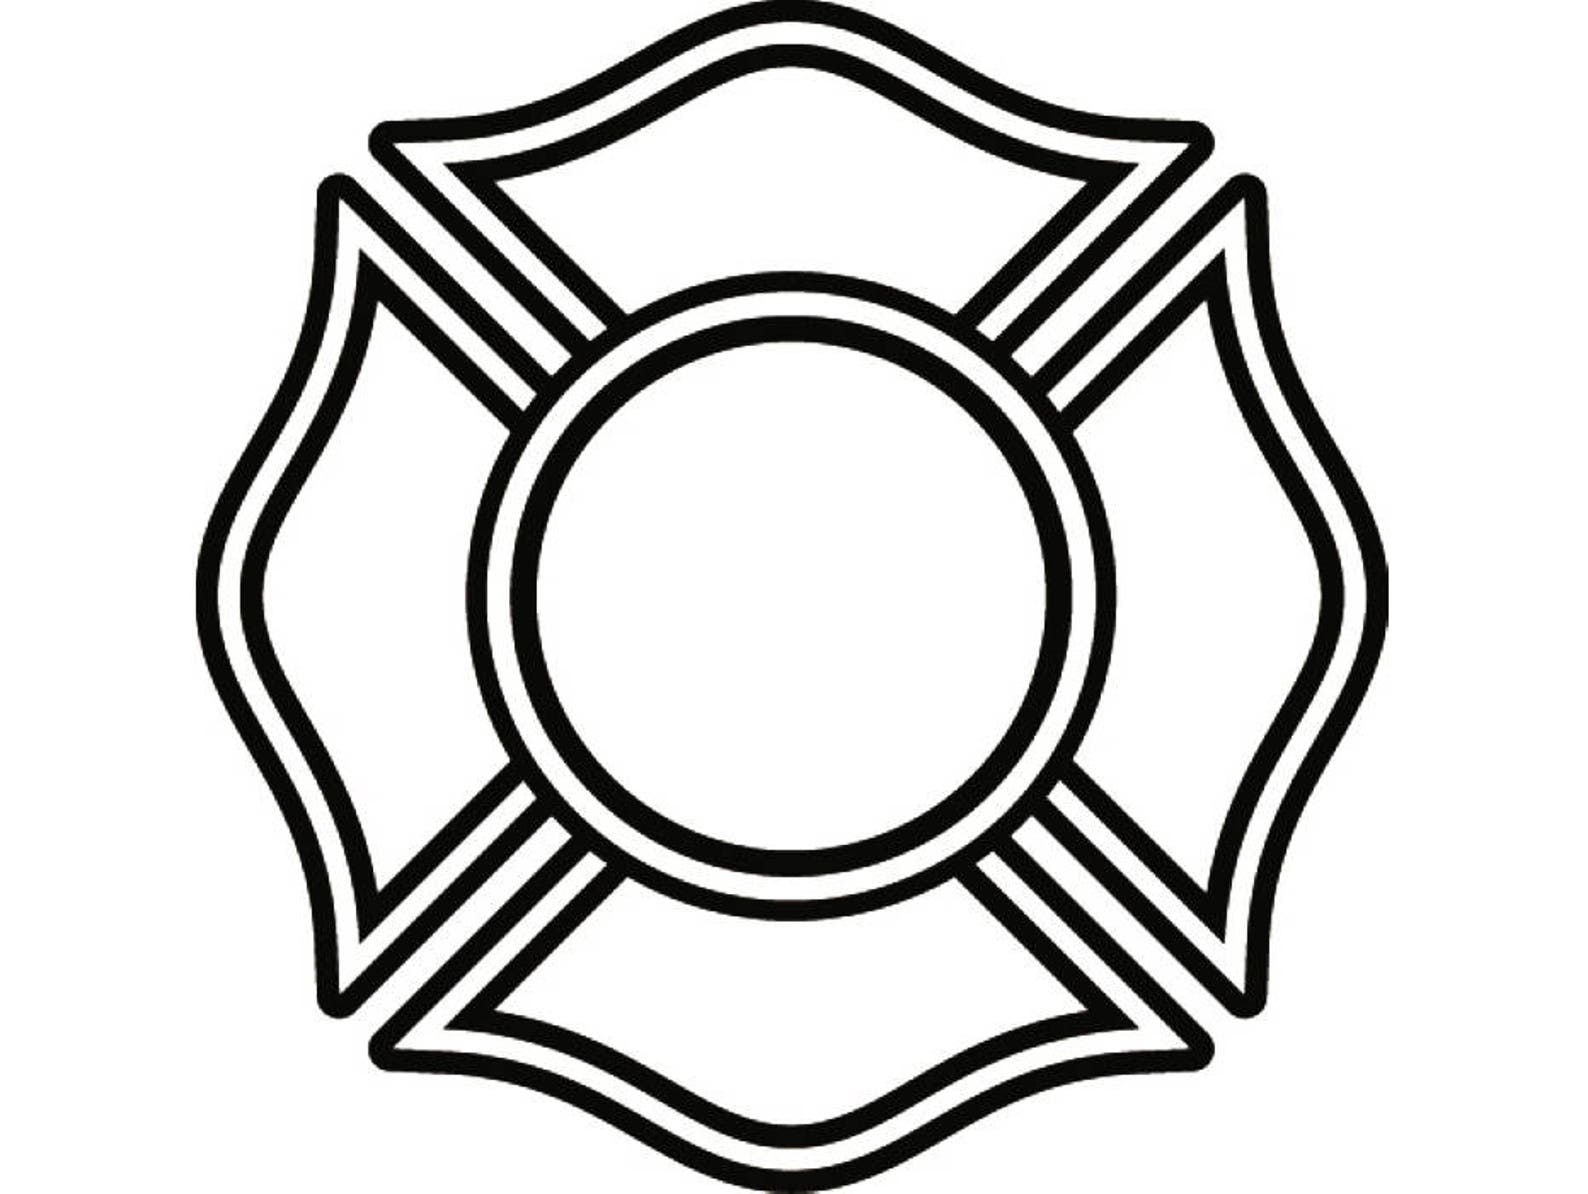 Rescue Shield. Пожарный контур. Firefighter logo. Blank logo. Nine shield